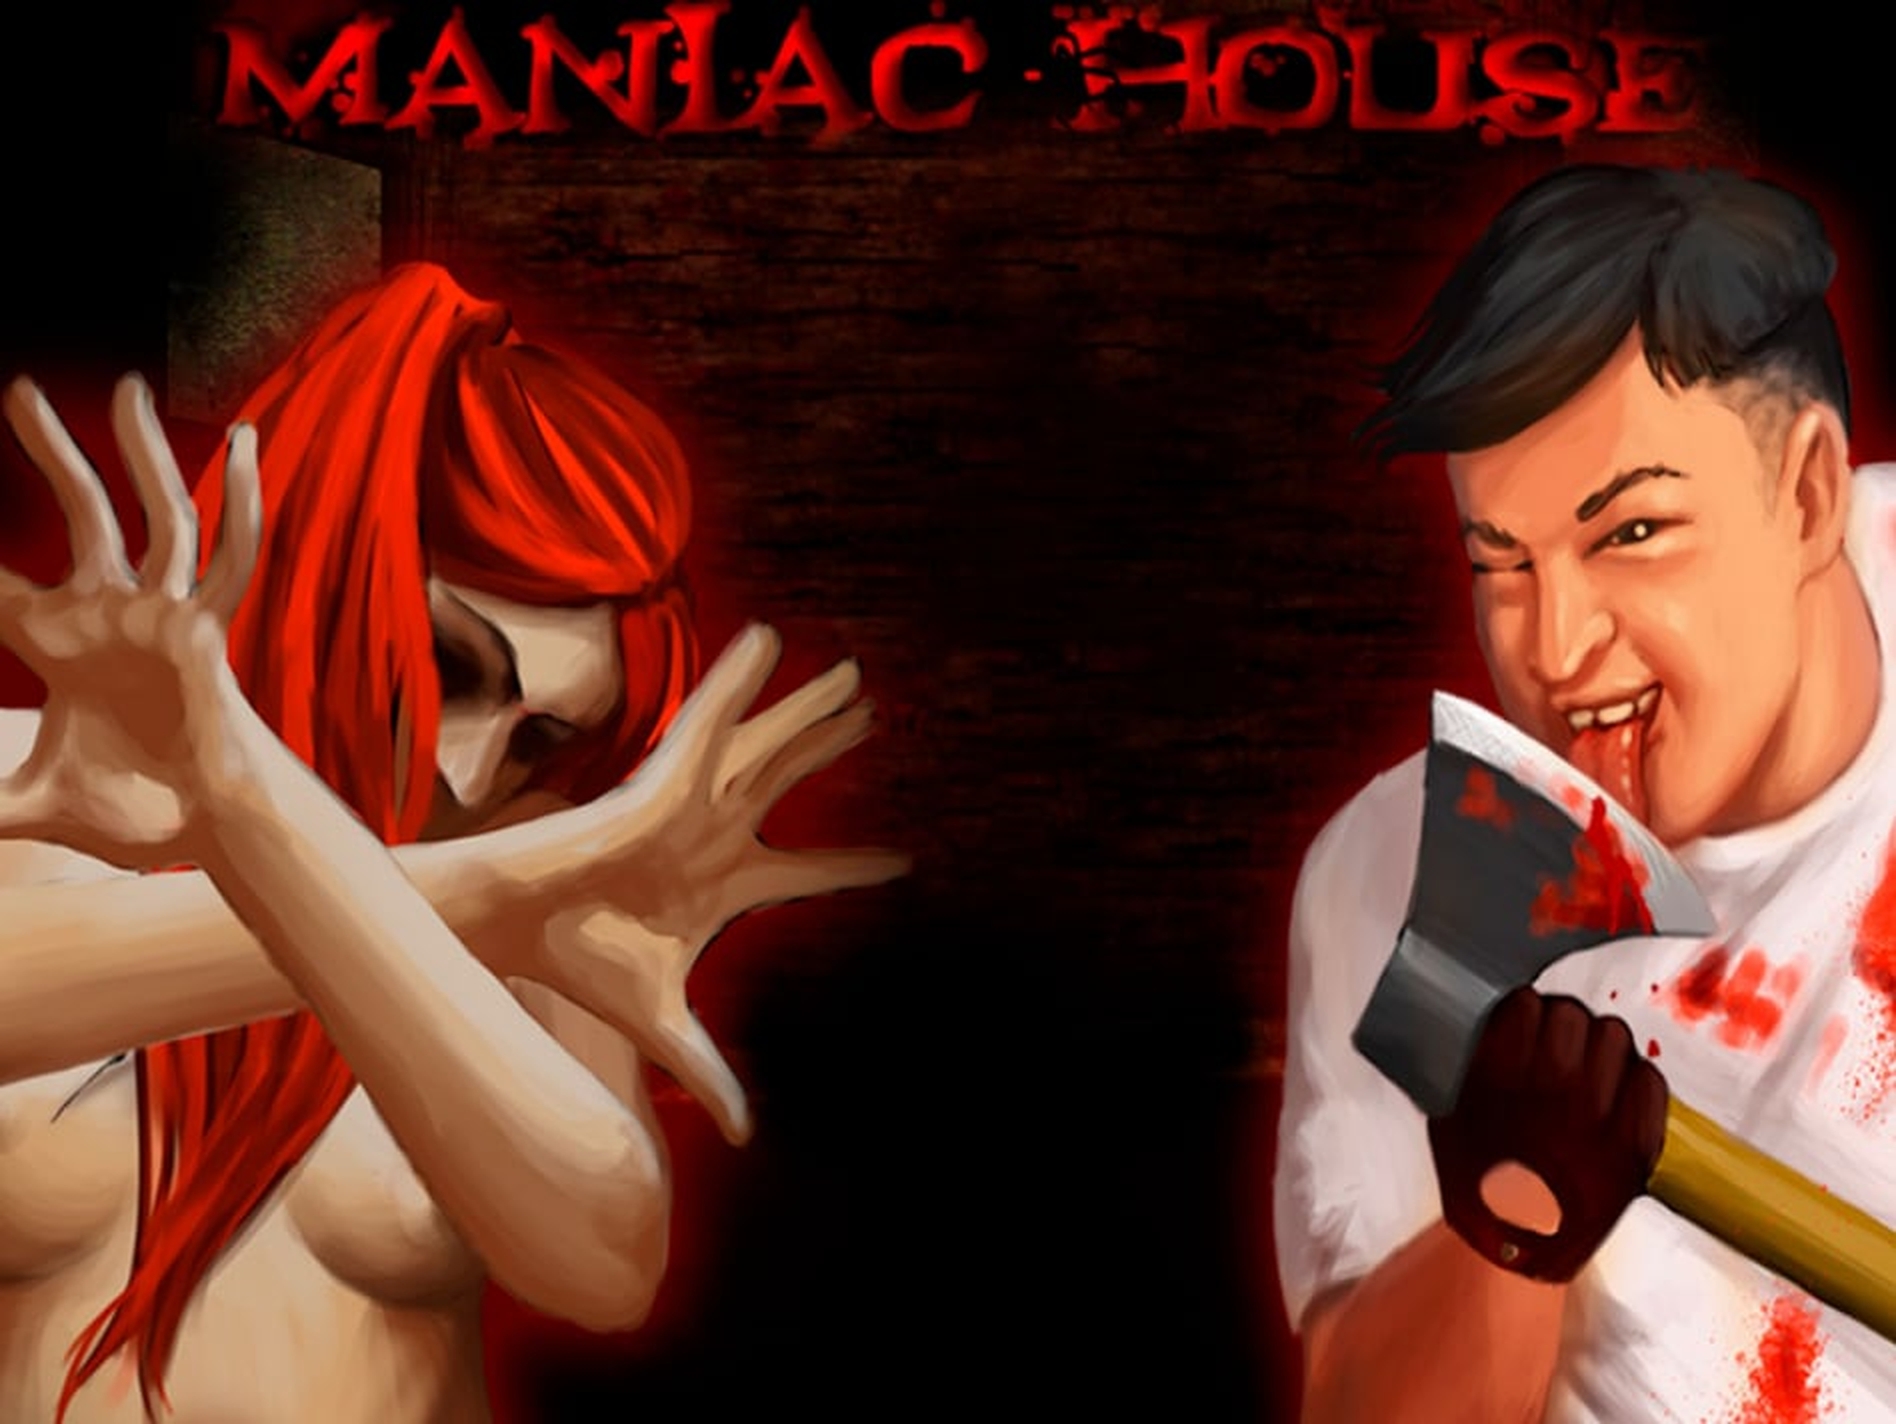 Maniac House demo